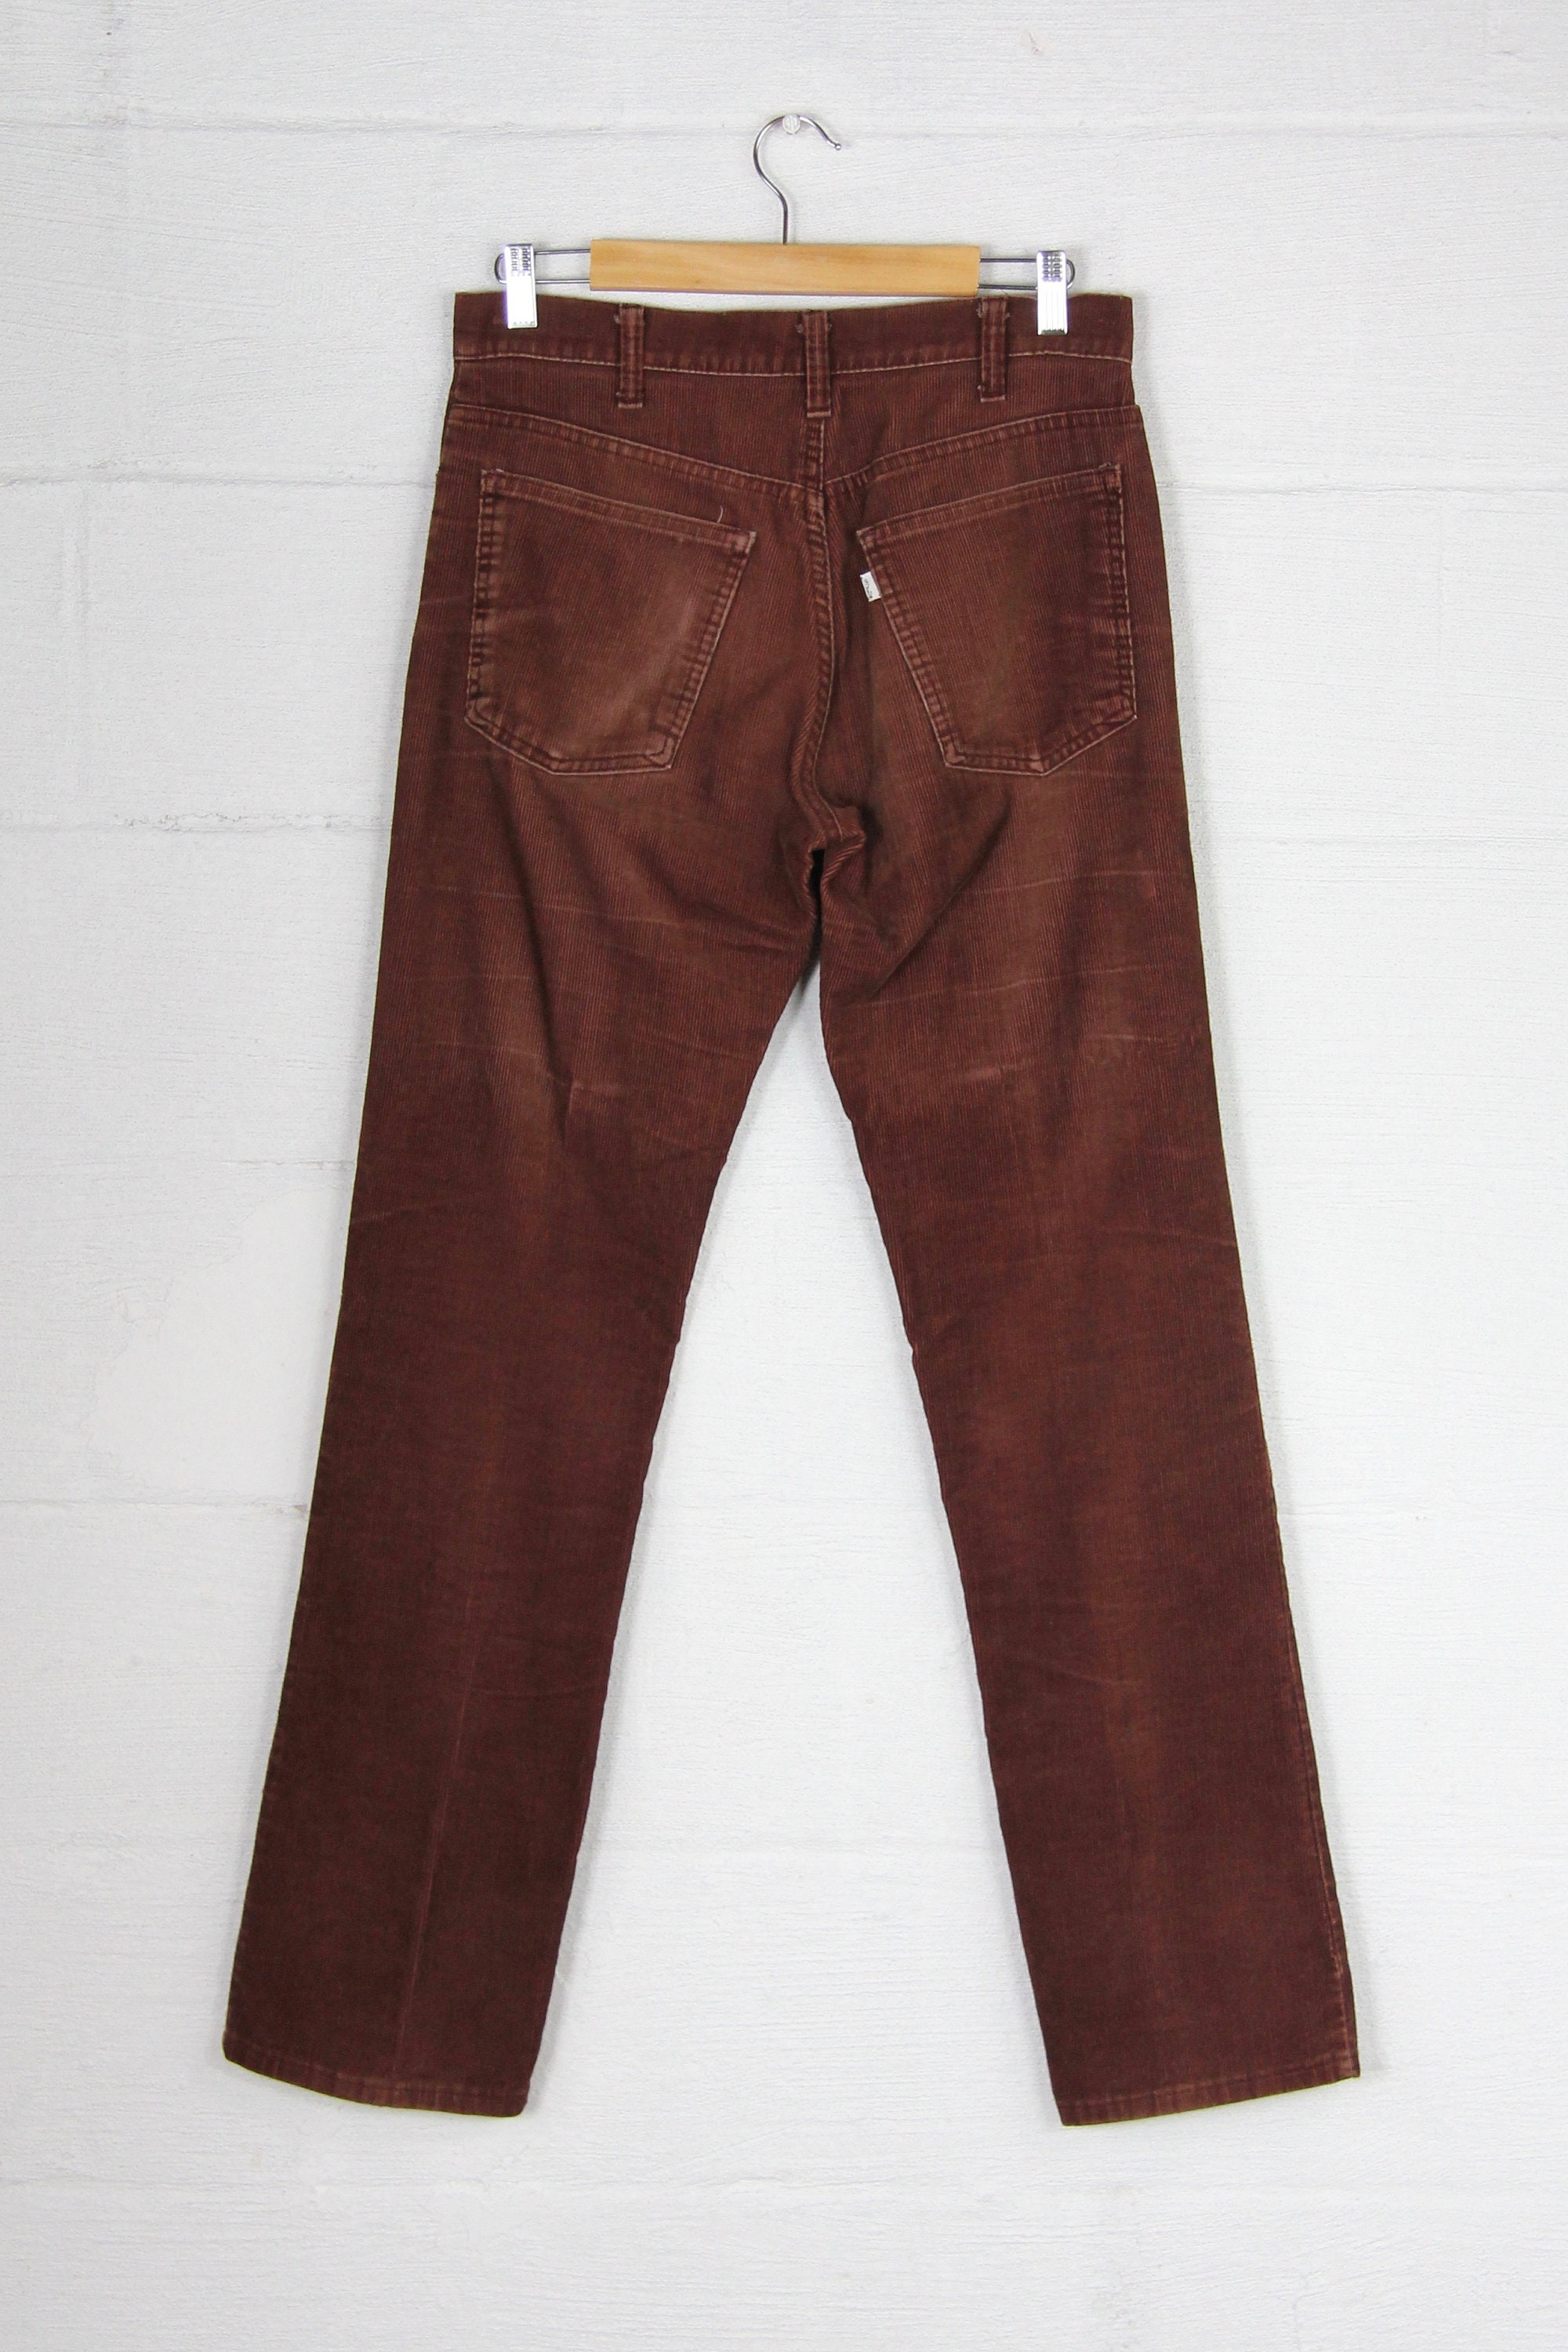 Levi's Maroon Straight Leg 1970's Corduroy Pants Vintage Size 31 White Tab